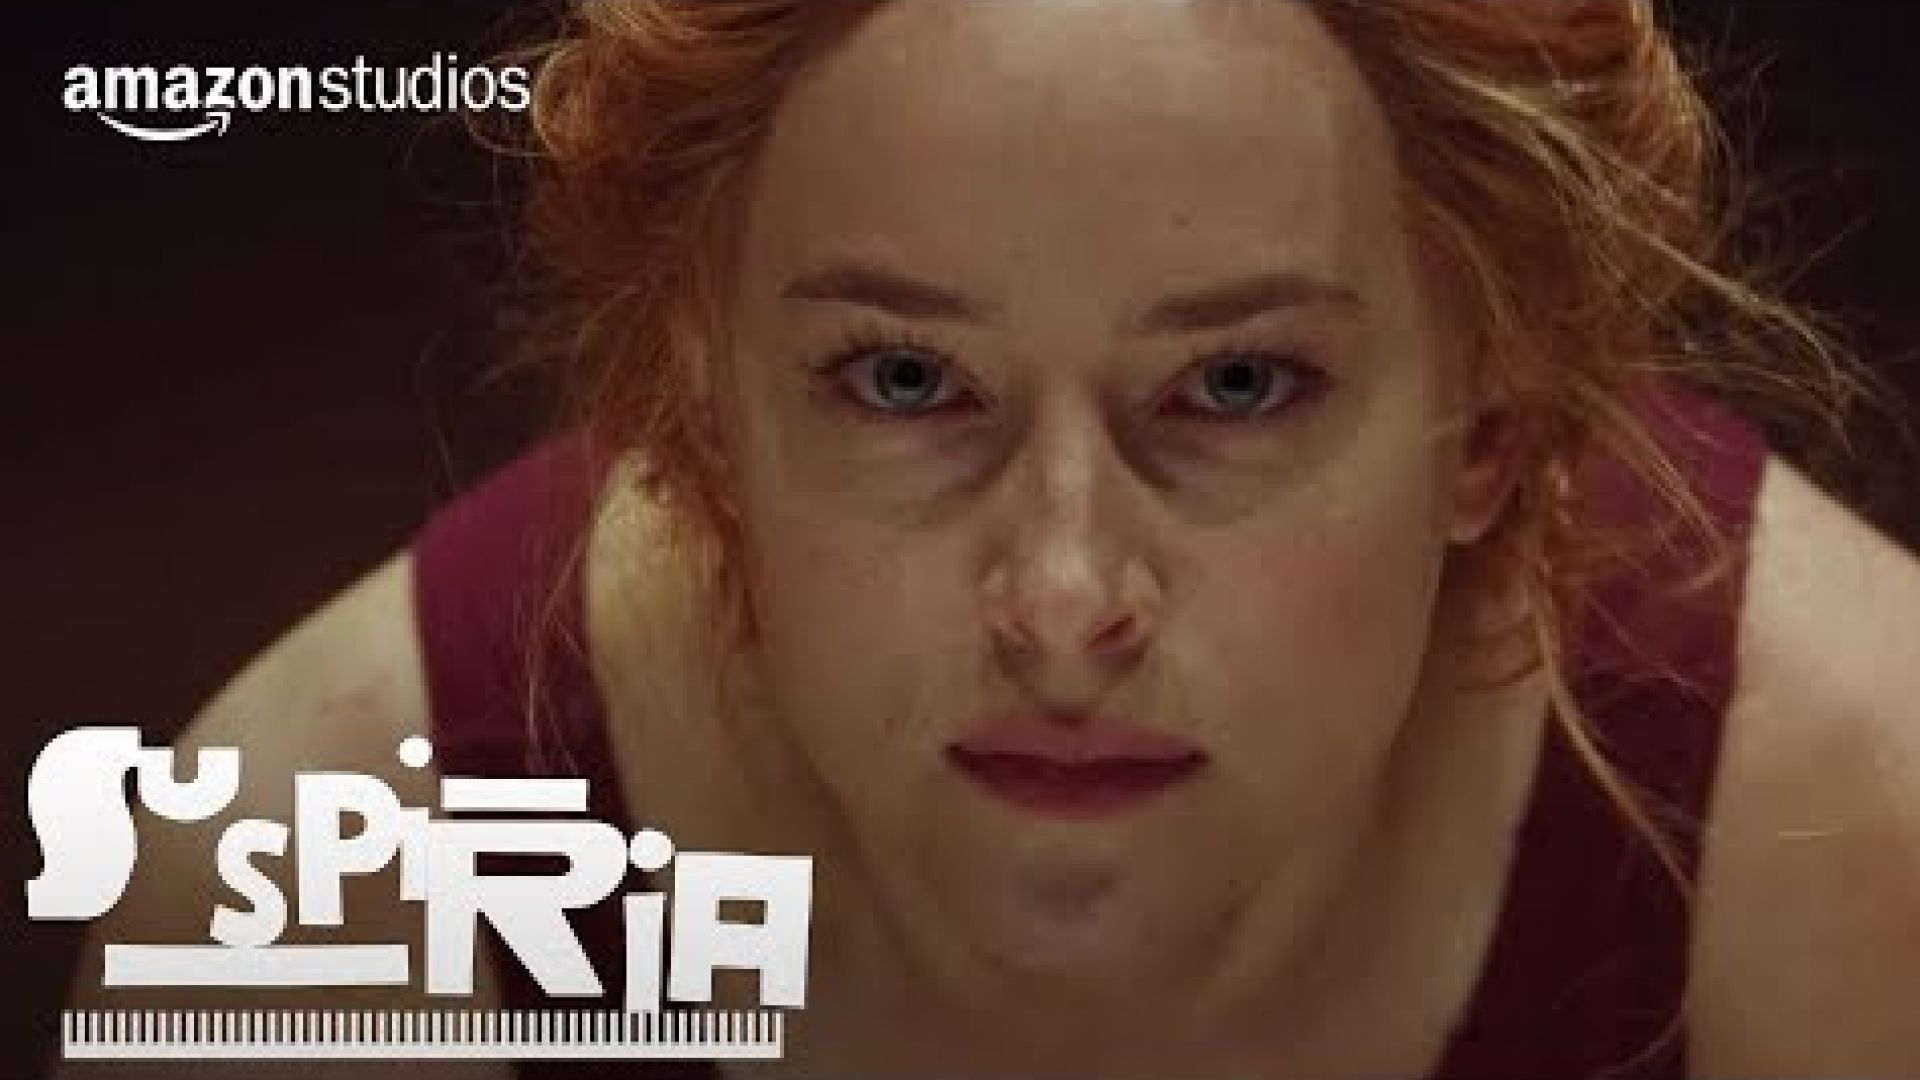 'Suspiria' Teaser Trailer - Amazon Studios